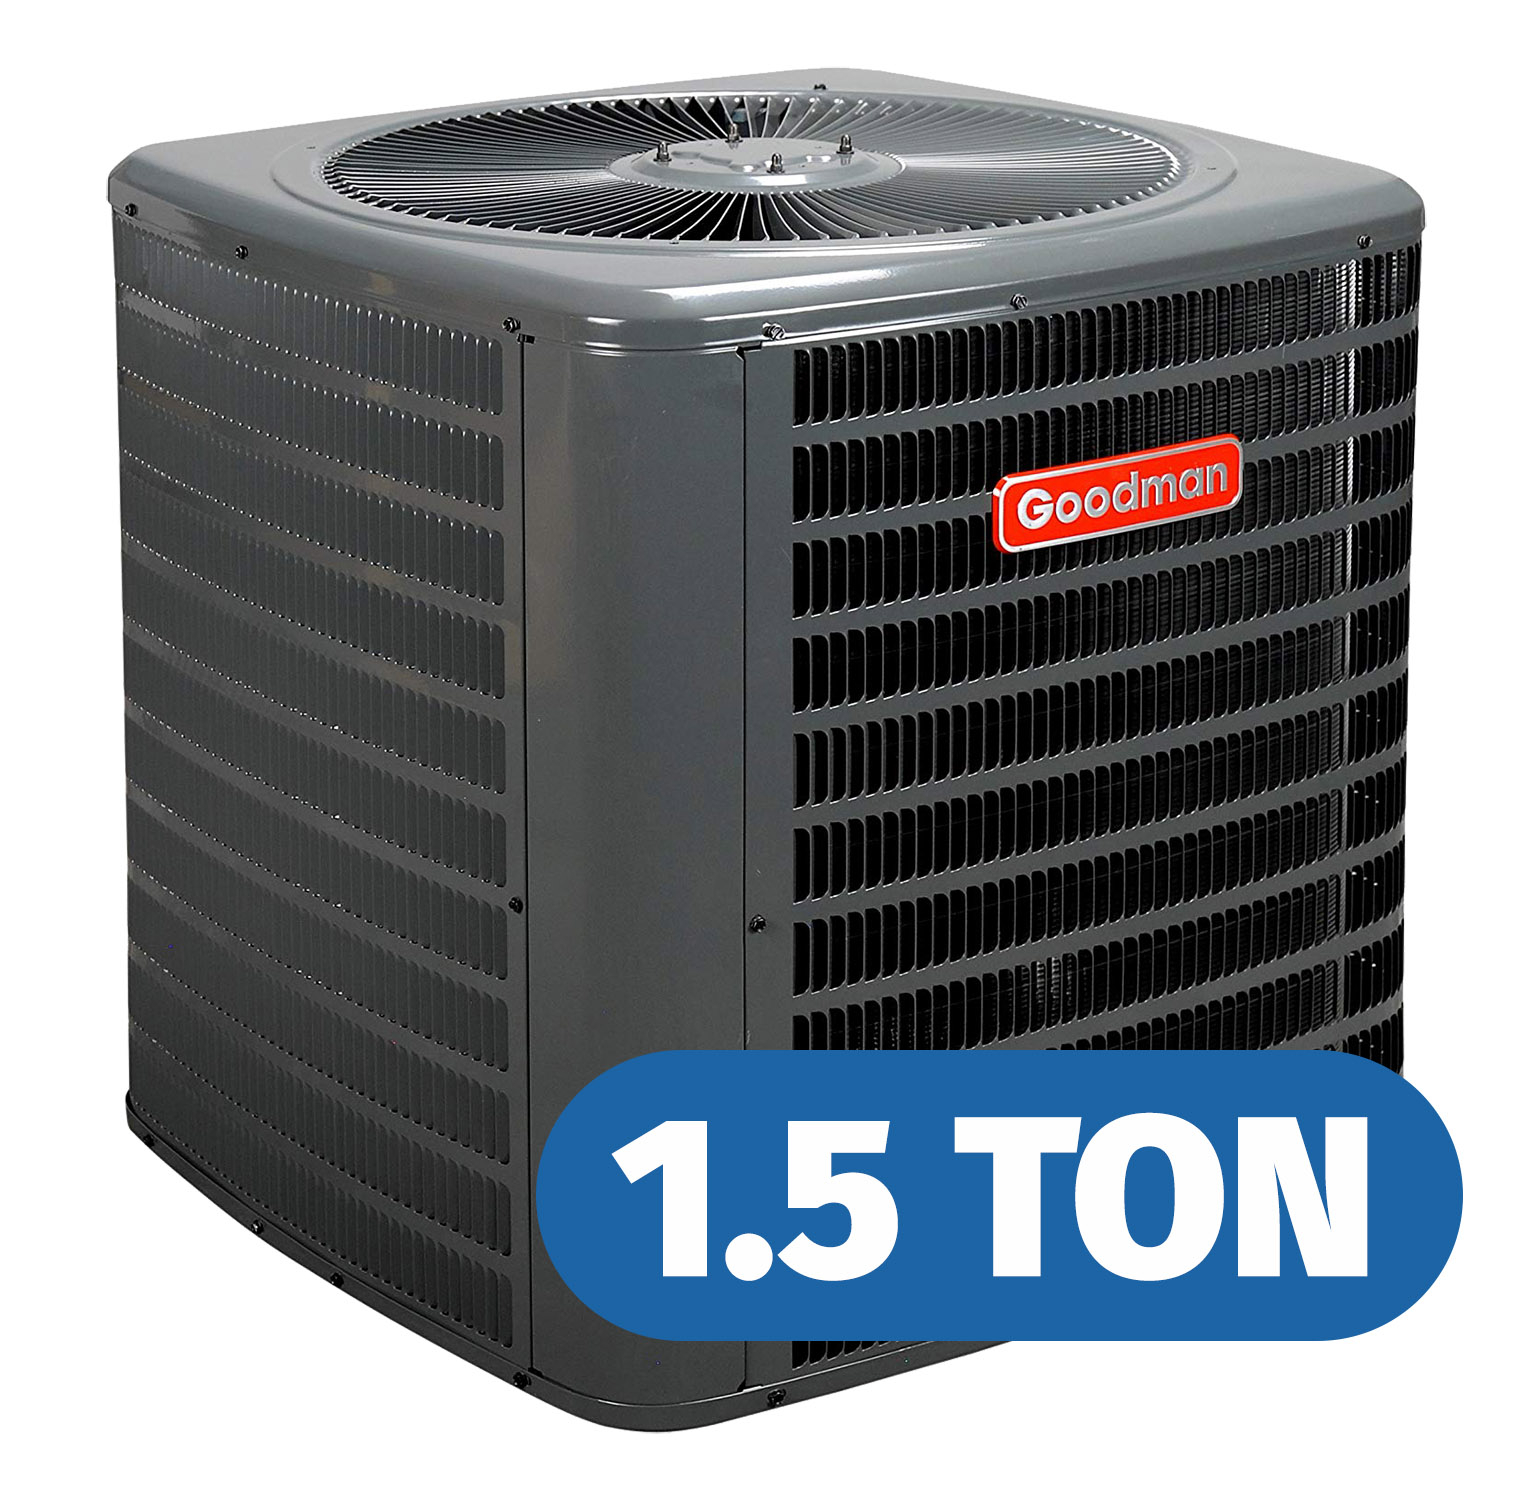 Goodman 1.5 Ton Air Conditioner 